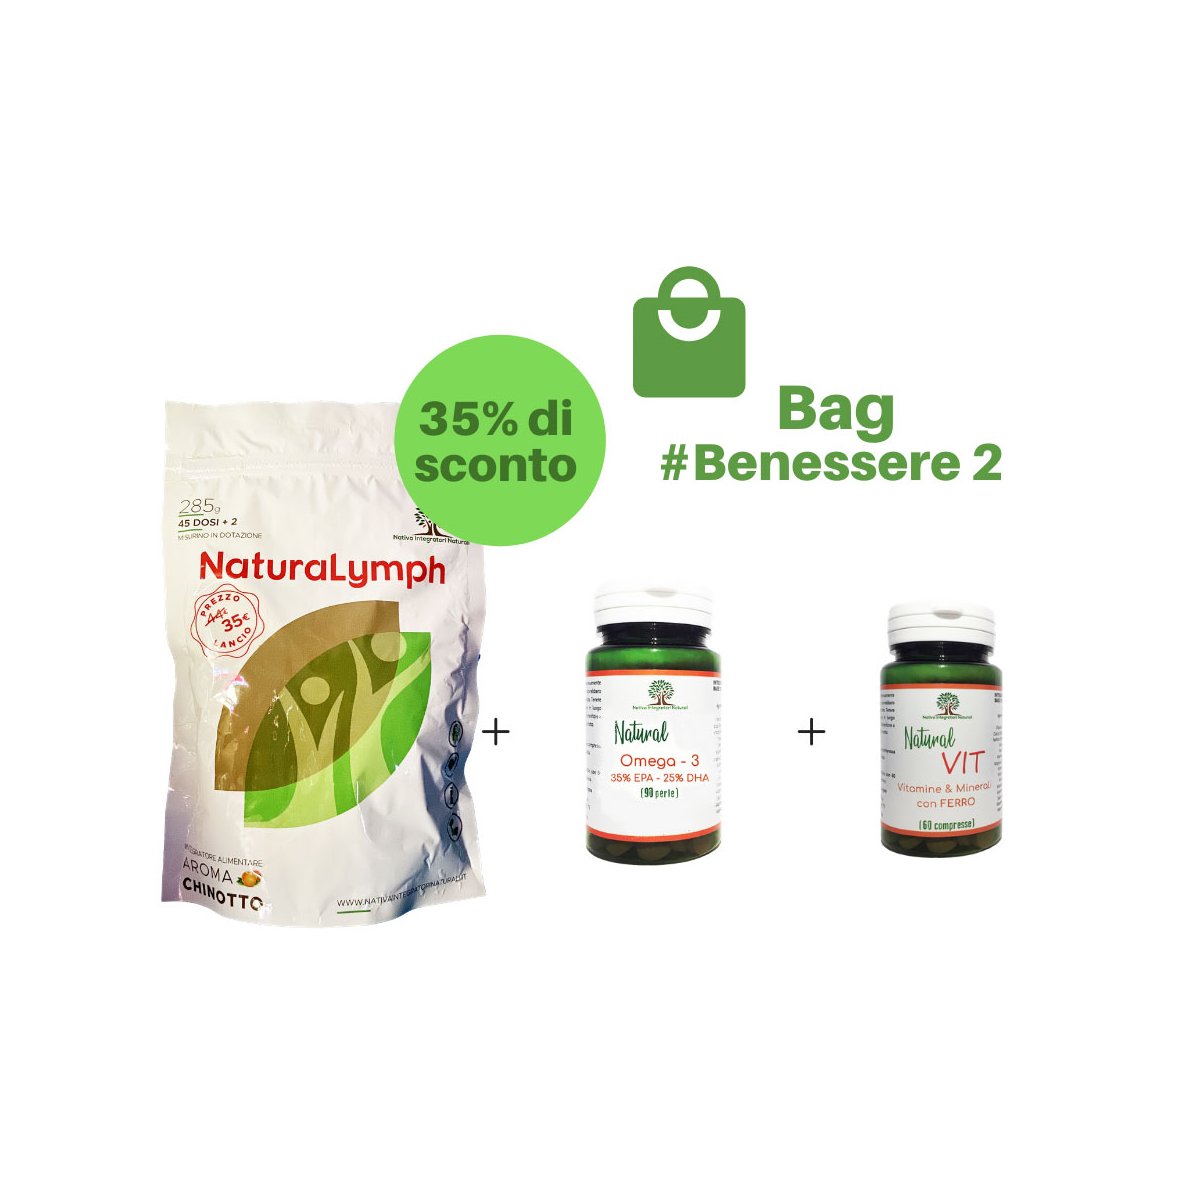 NaturaLymph + omega 3 + vitamine